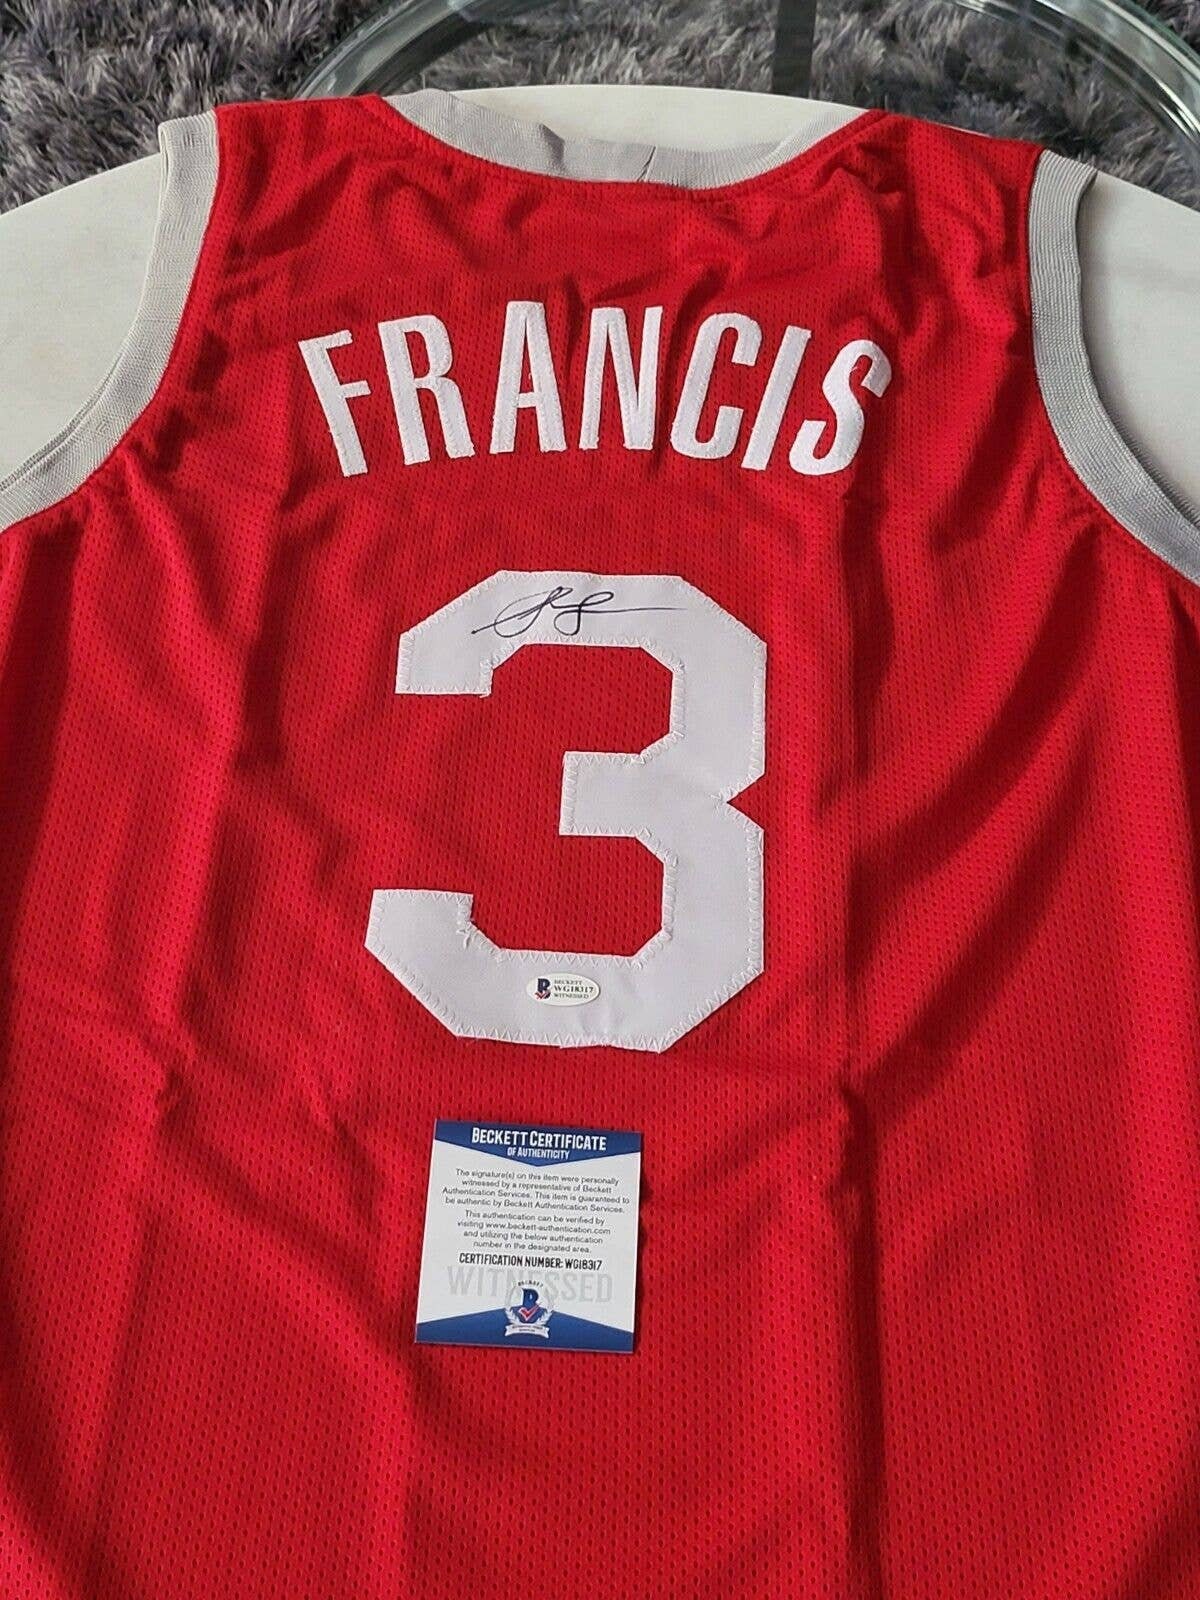 Steve Francis Autographed Memorabilia  Signed Photo, Jersey, Collectibles  & Merchandise